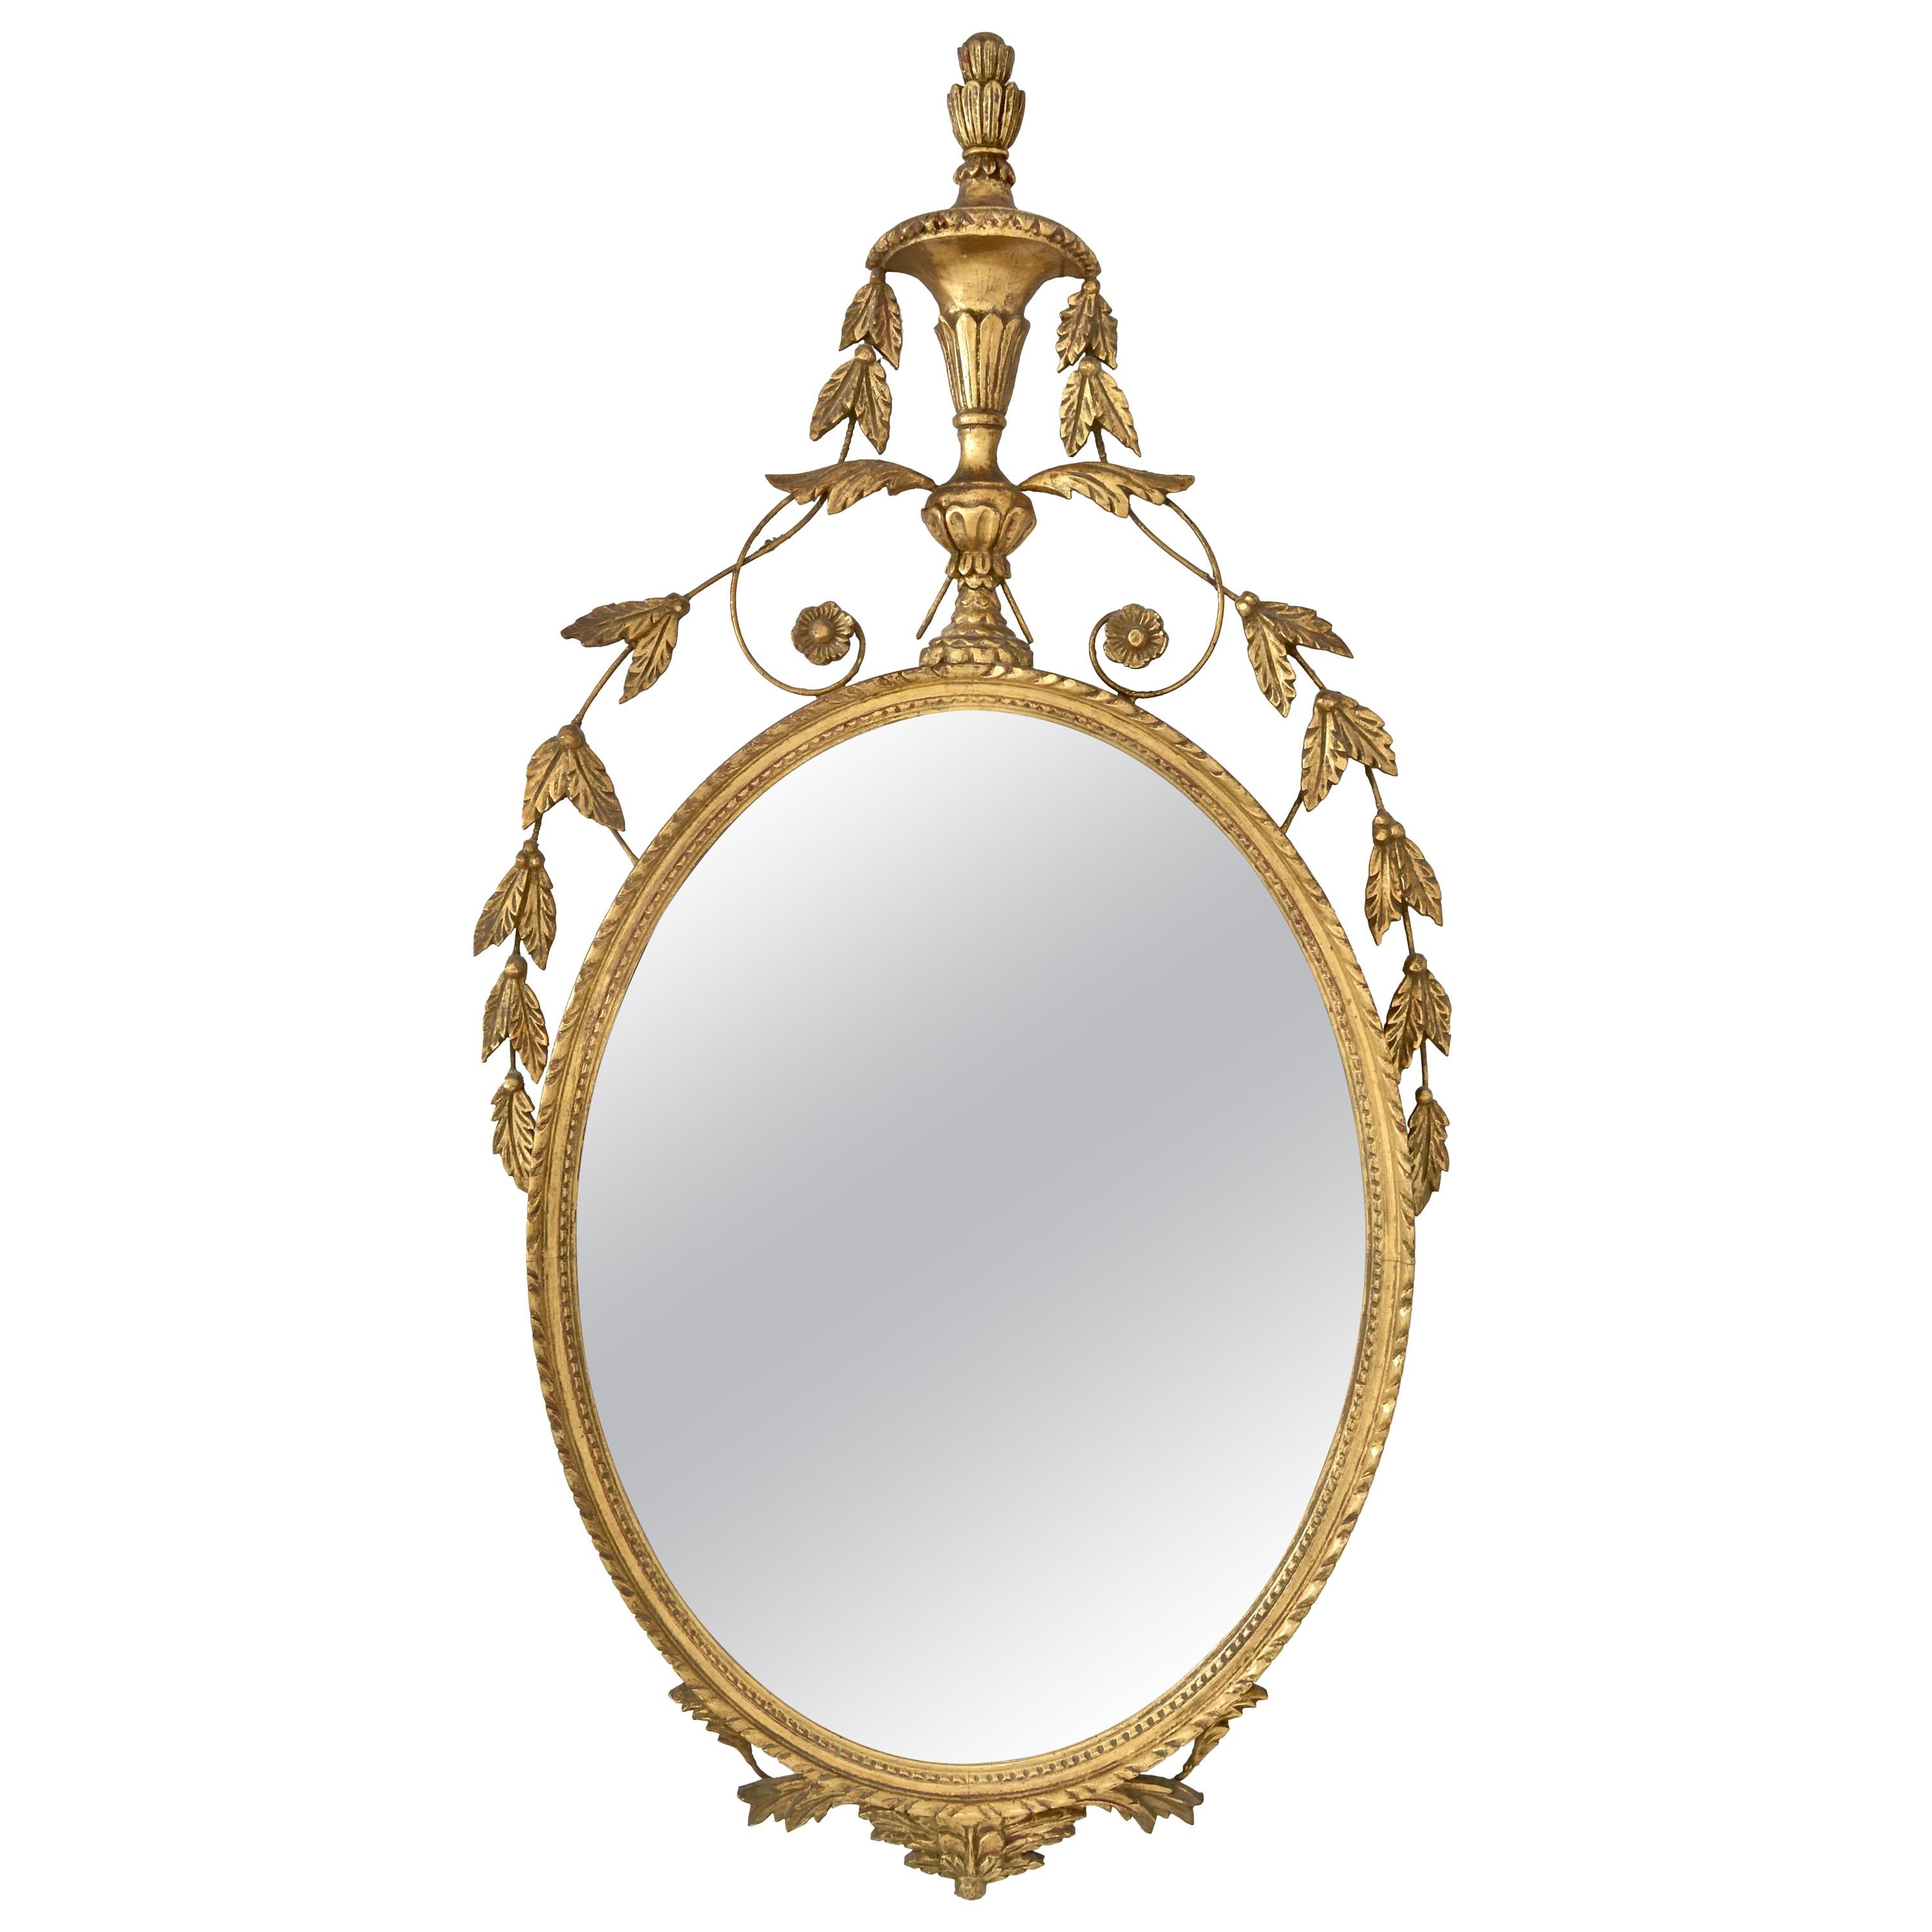 Adams Style Oval Giltwood Mirror, Italy, circa 1950s